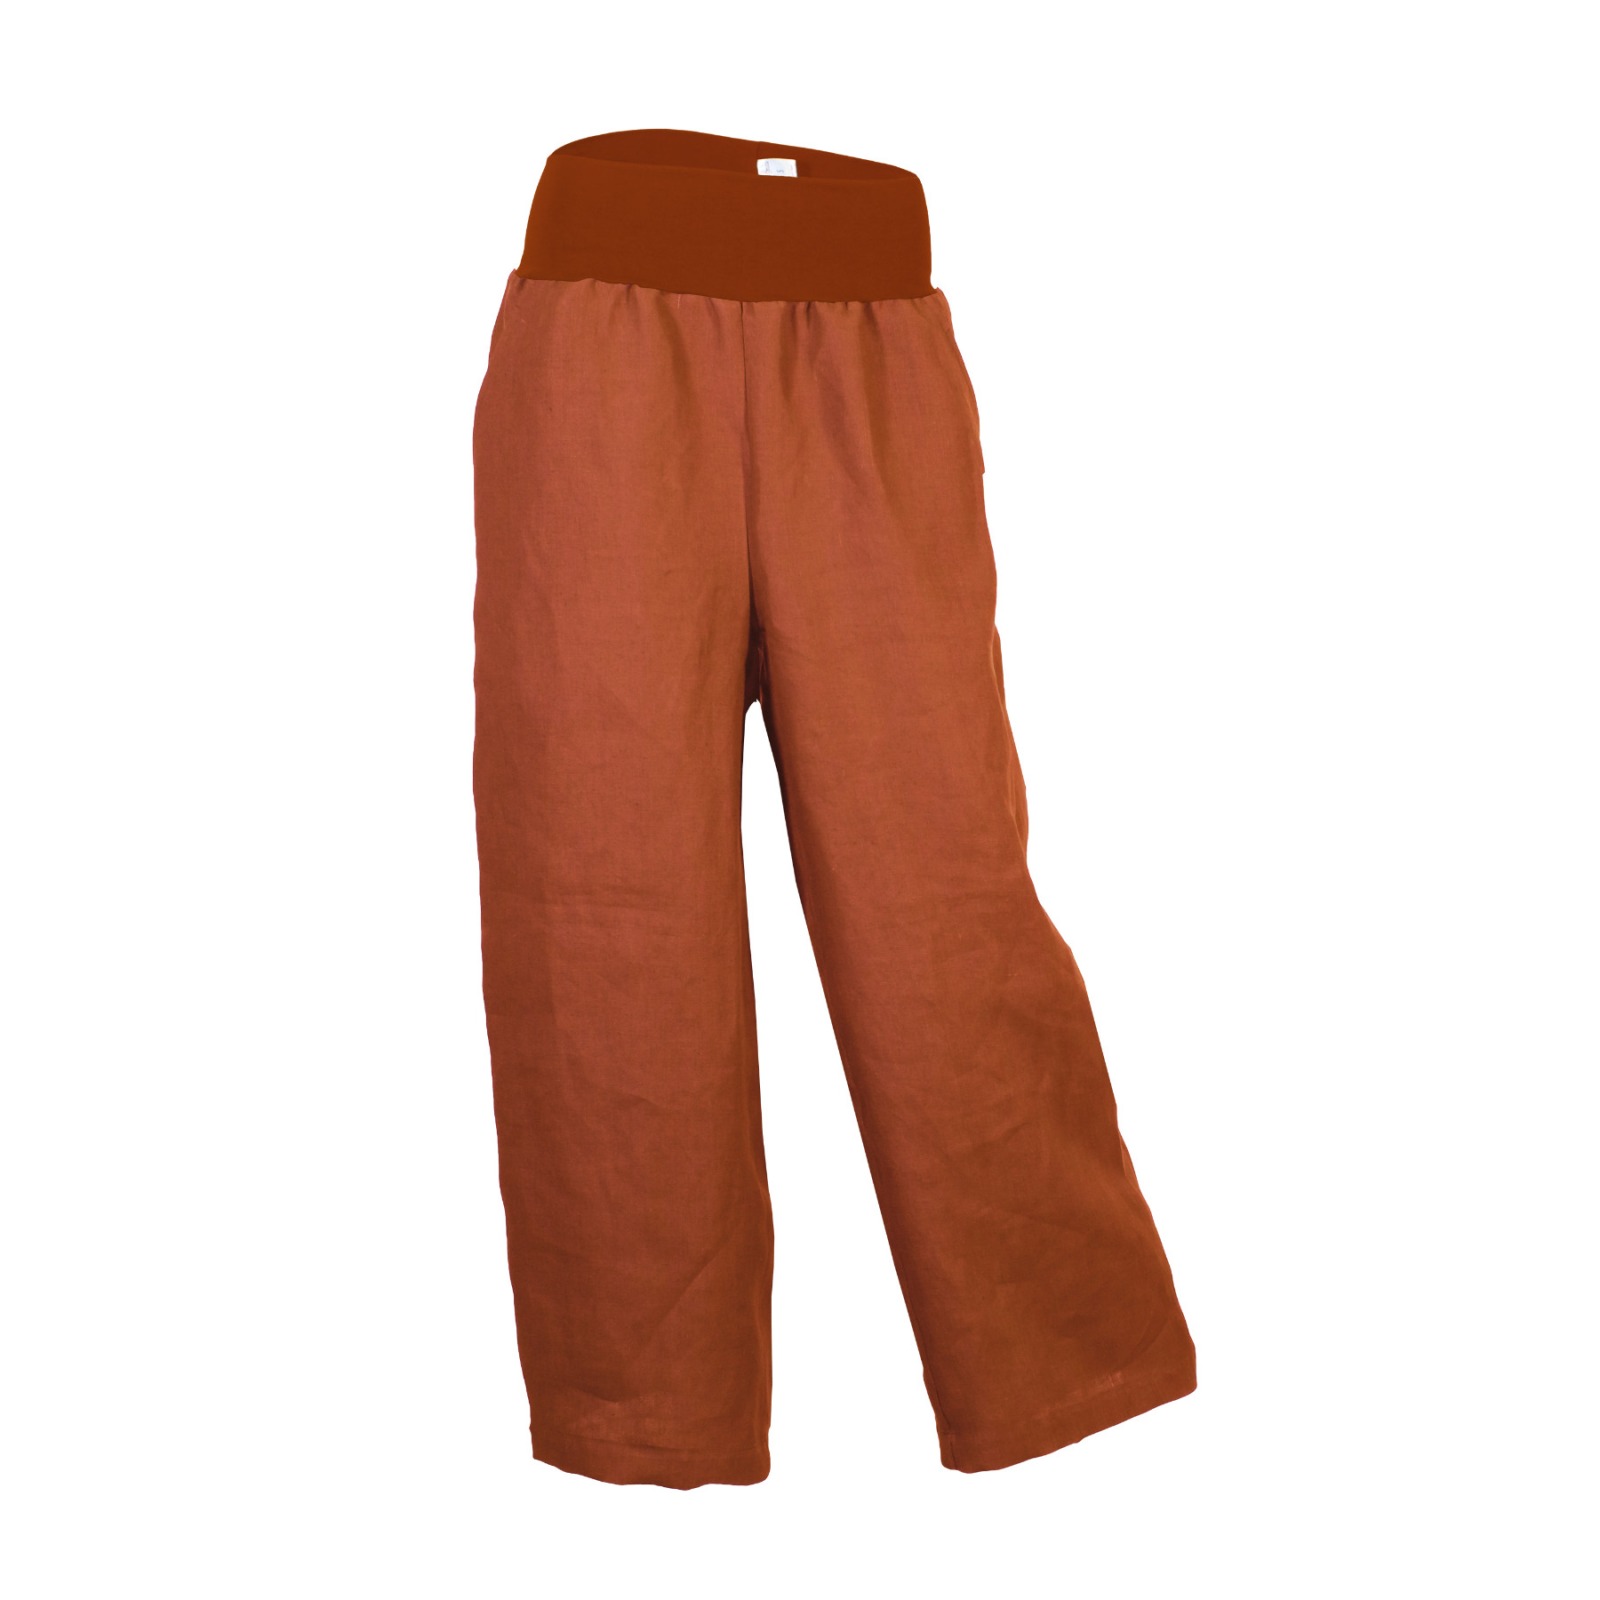 Bio hemp trousers Lola rust orange